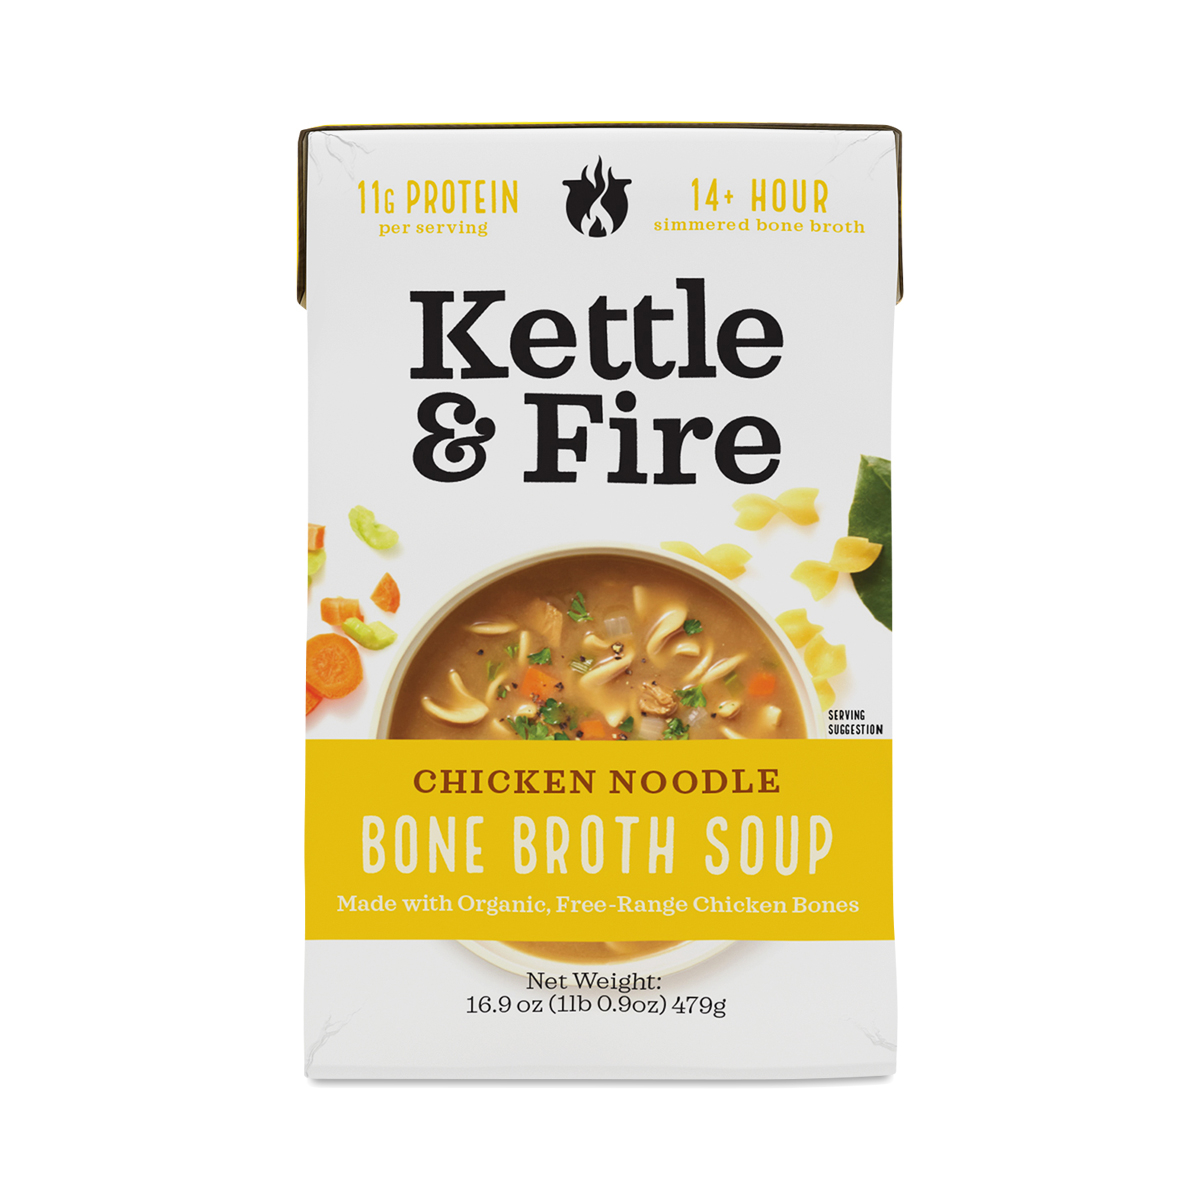 Kettle & Fire Bone Broth, Chicken Noodle Soup 16.9 oz carton